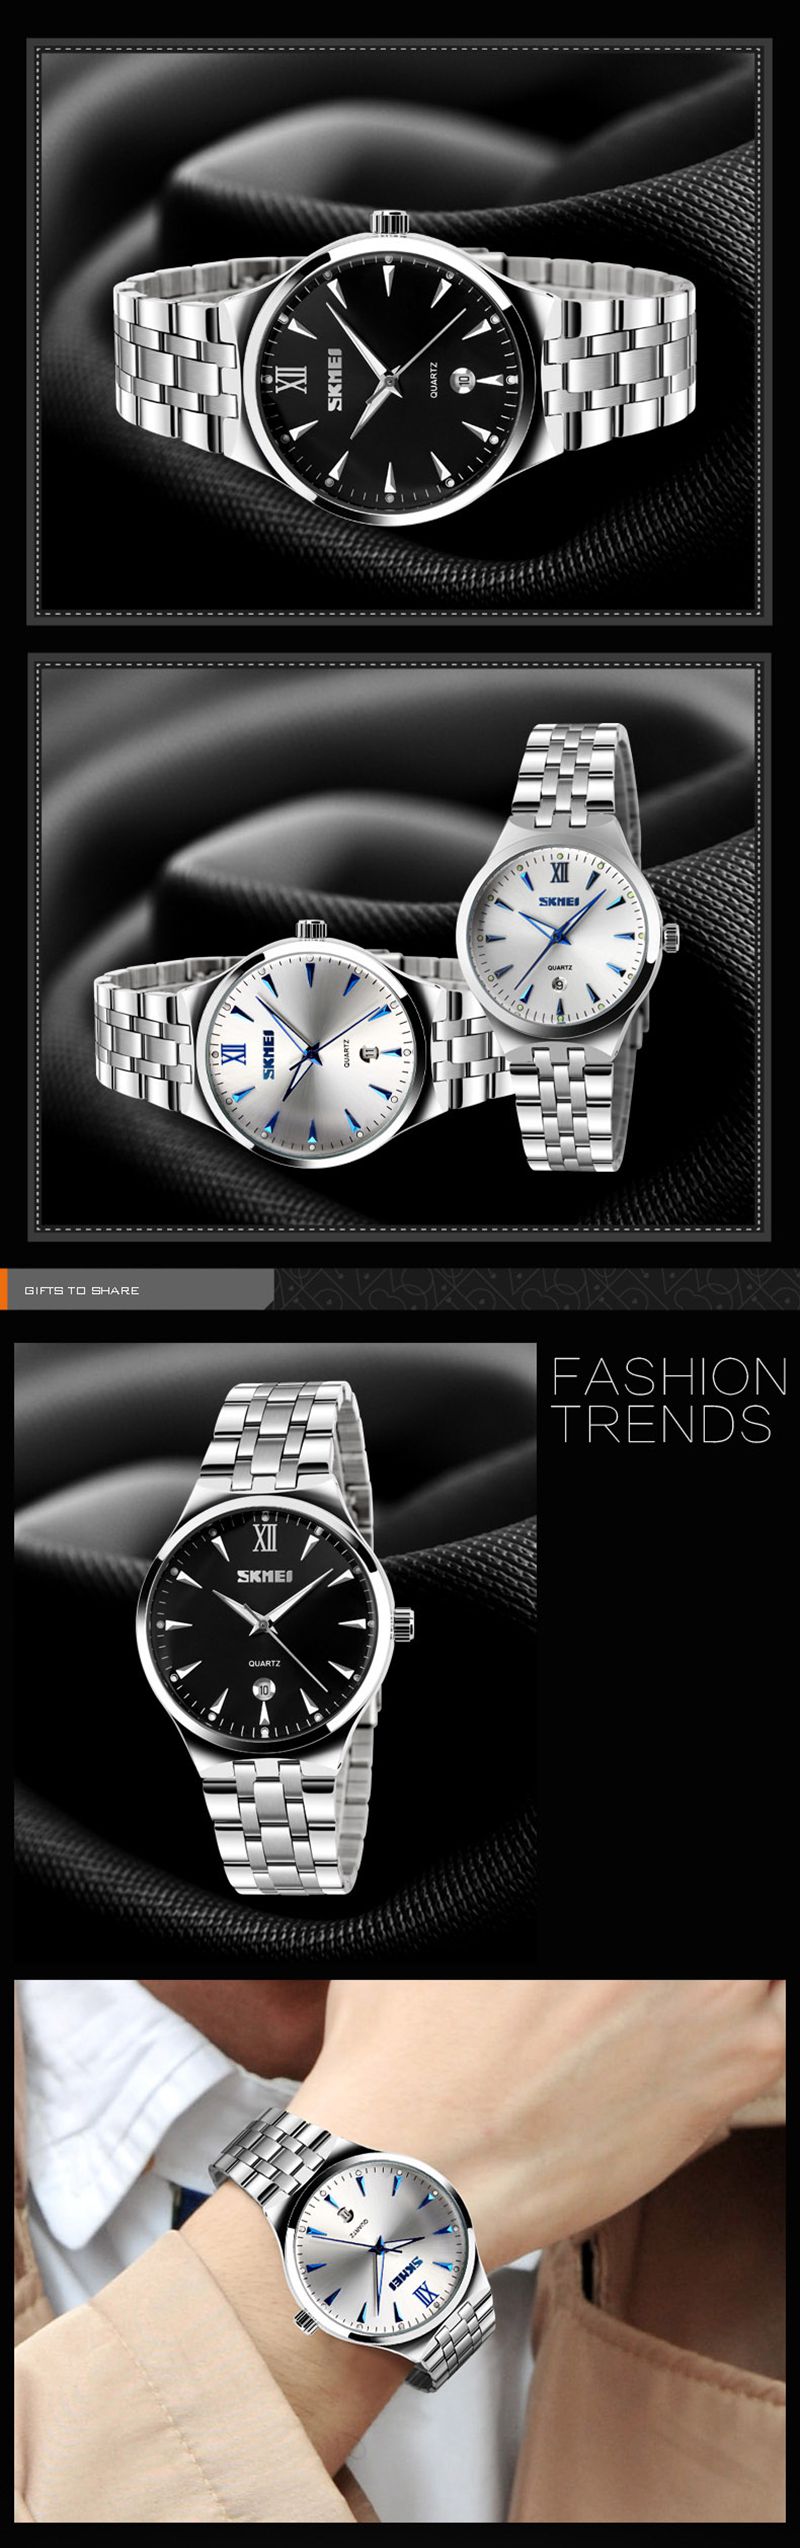 SKMEI-9071-Couple-Watch-Fashion-Luminous-Simple-Style-Lovers-Quartz-Wrist-Watch-1219699